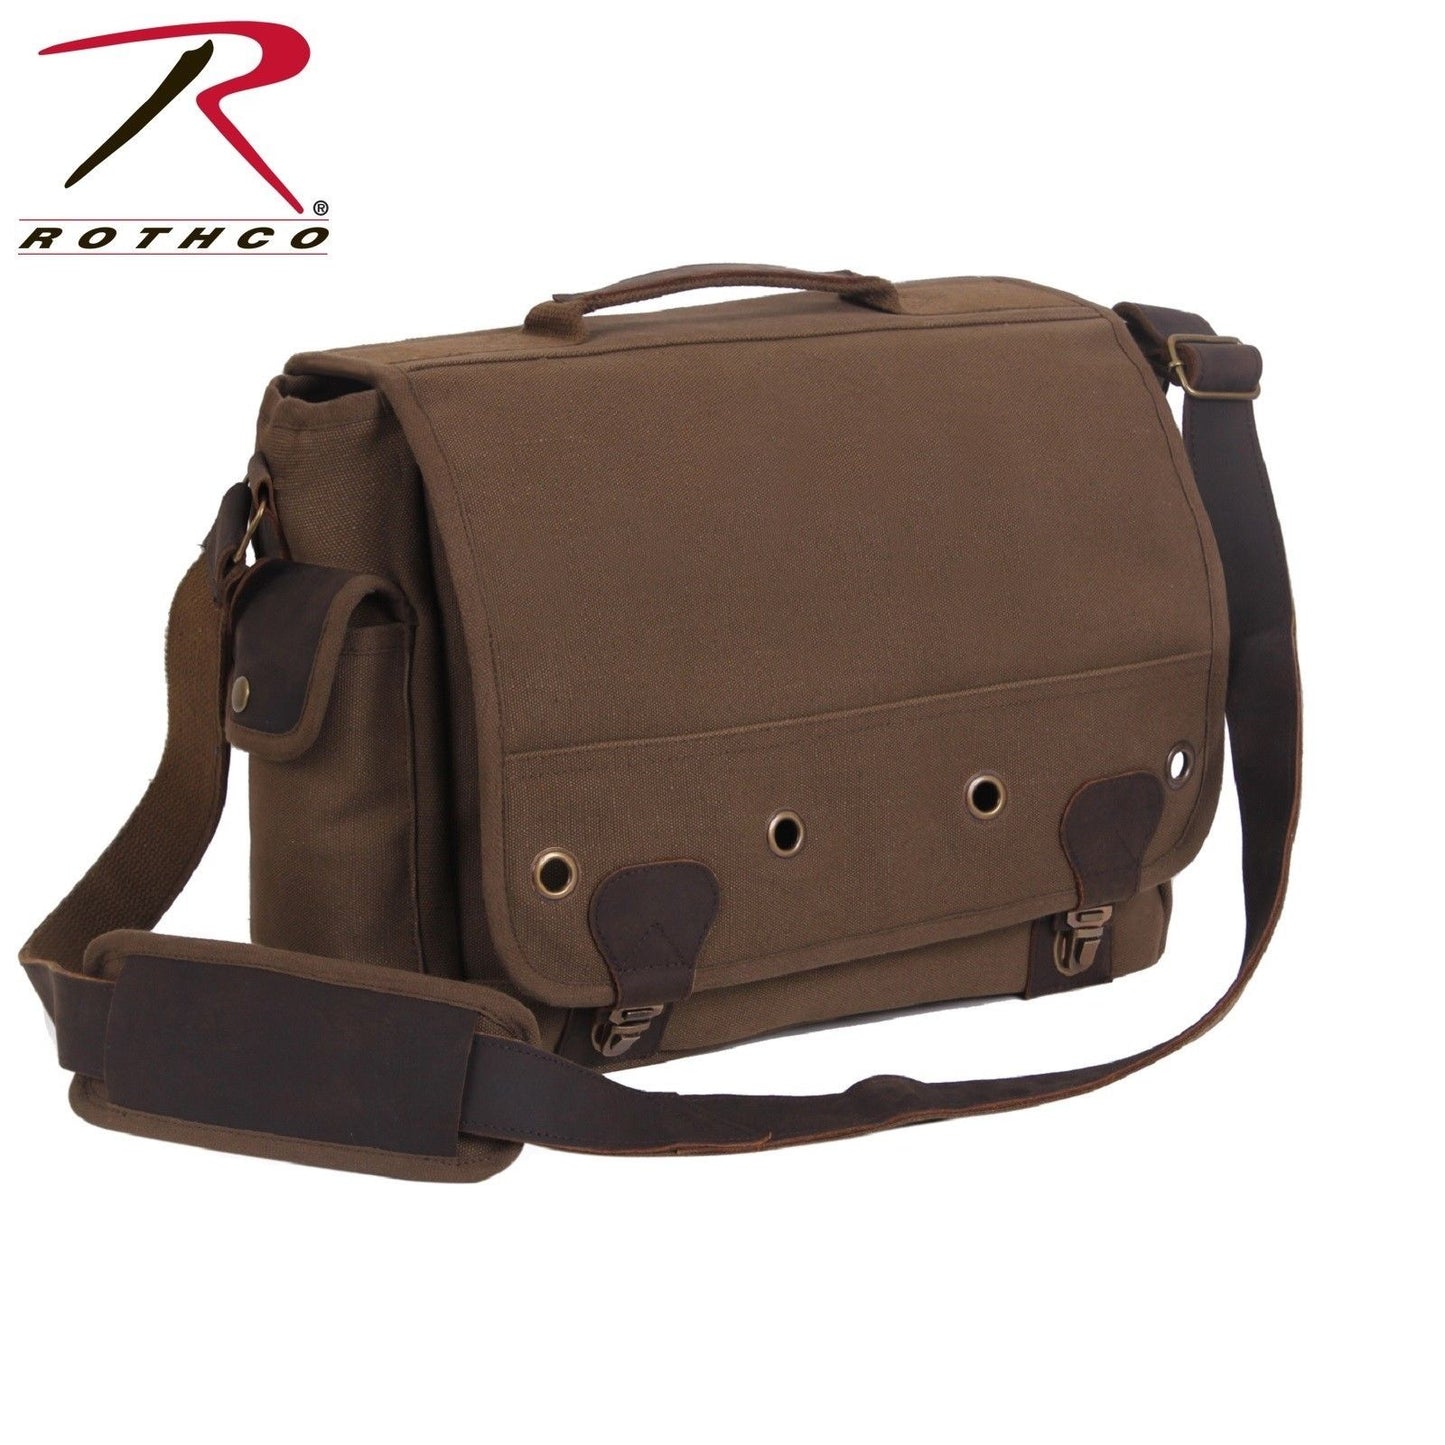 Rothco Canvas Trailblazer Laptop Bag - Shoulder Bag With Padded Computer Sleeve